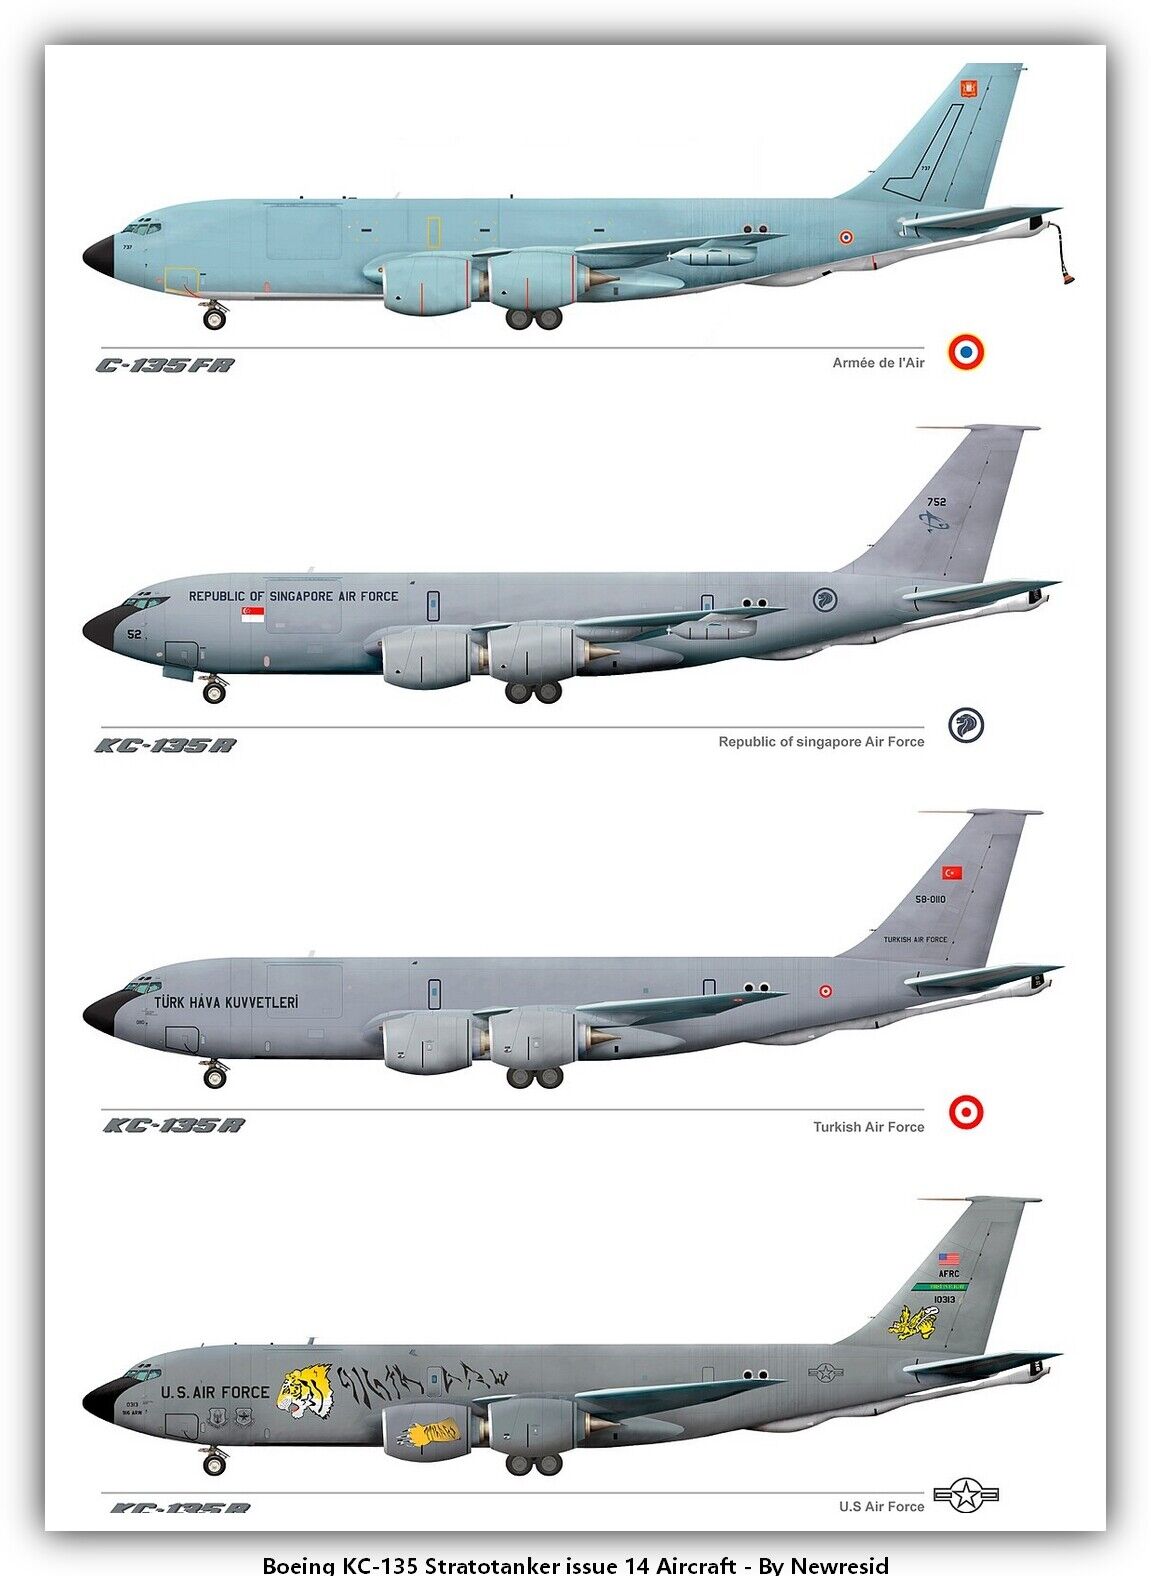 Boeing KC-135 Stratotanker issue 14 Aircraft